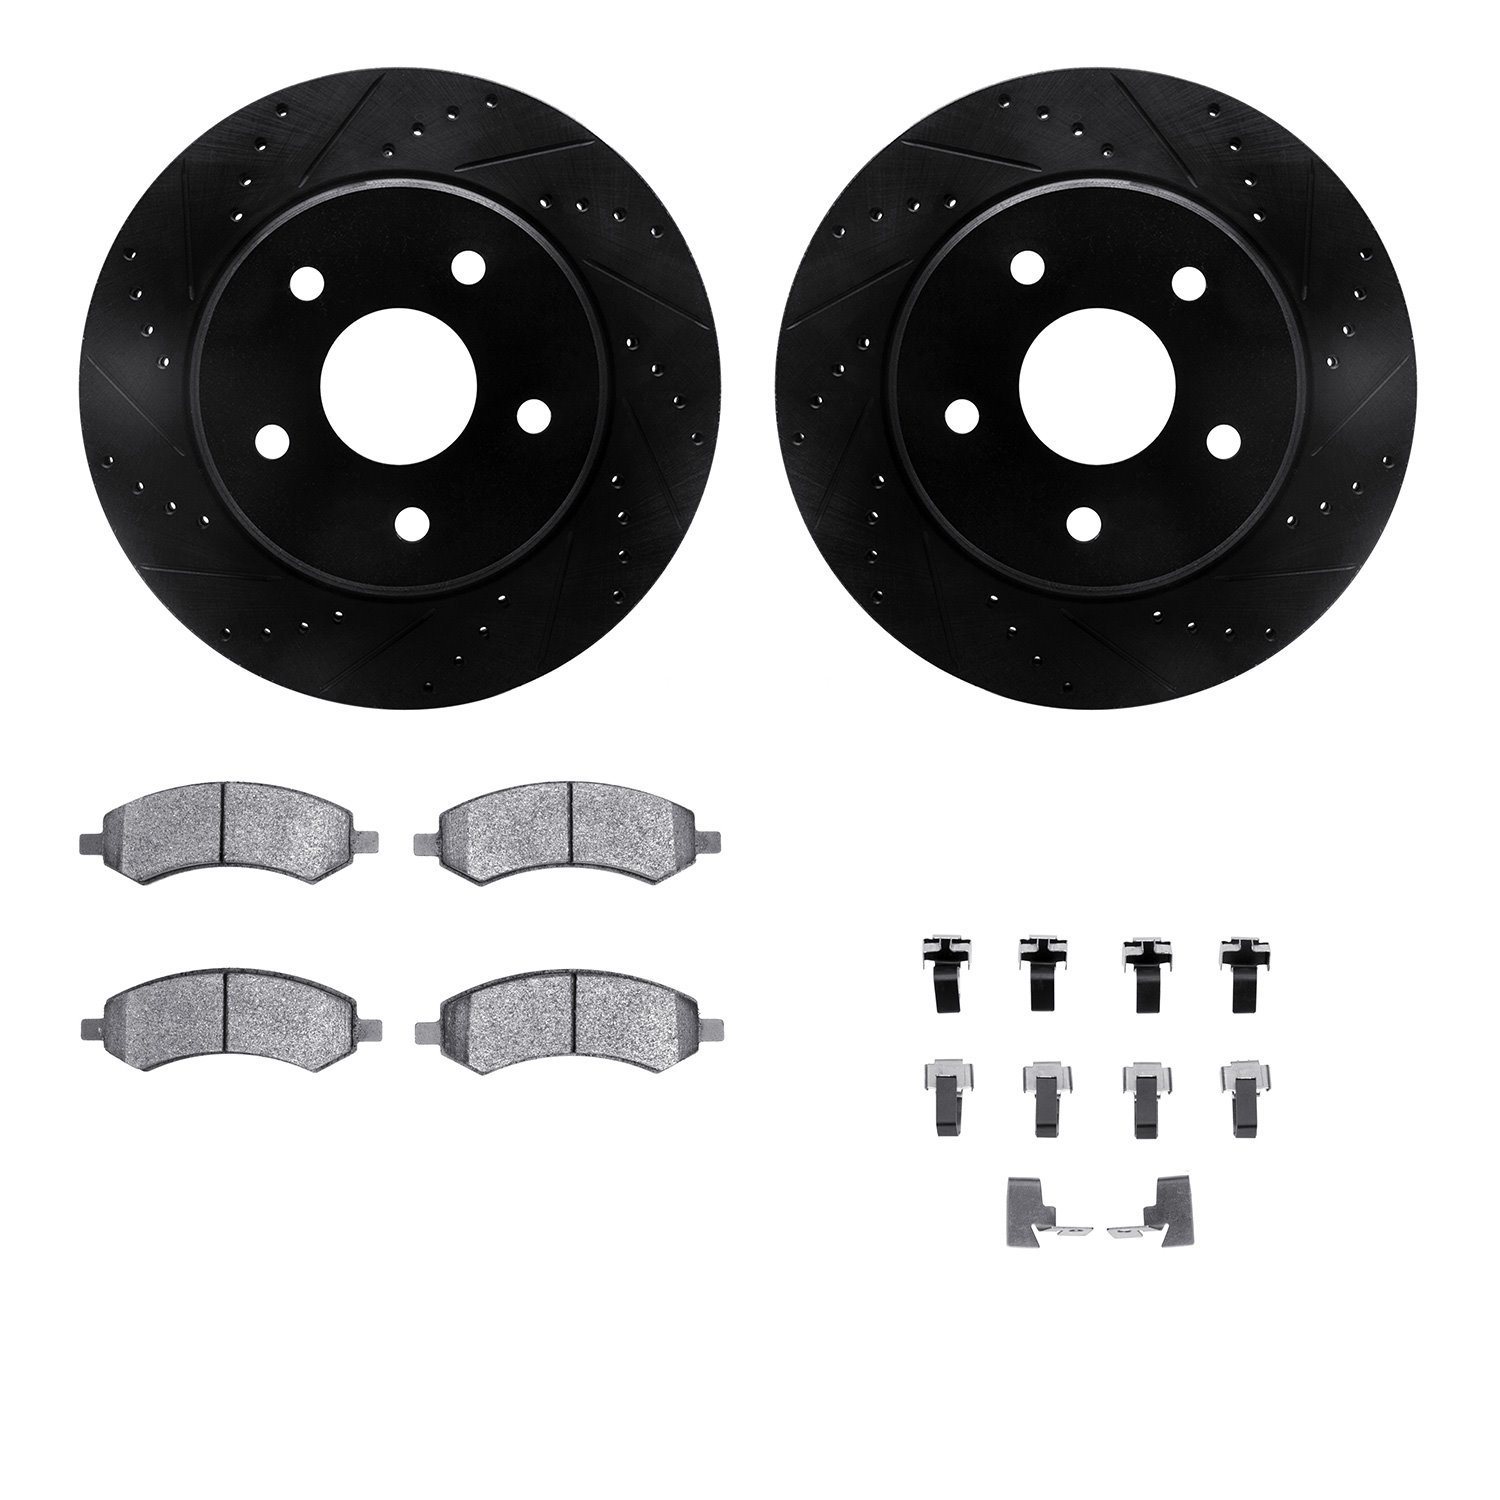 8412-42013 Drilled/Slotted Brake Rotors with Ultimate-Duty Brake Pads Kit & Hardware [Black], 2008-2012 Mopar, Position: Front